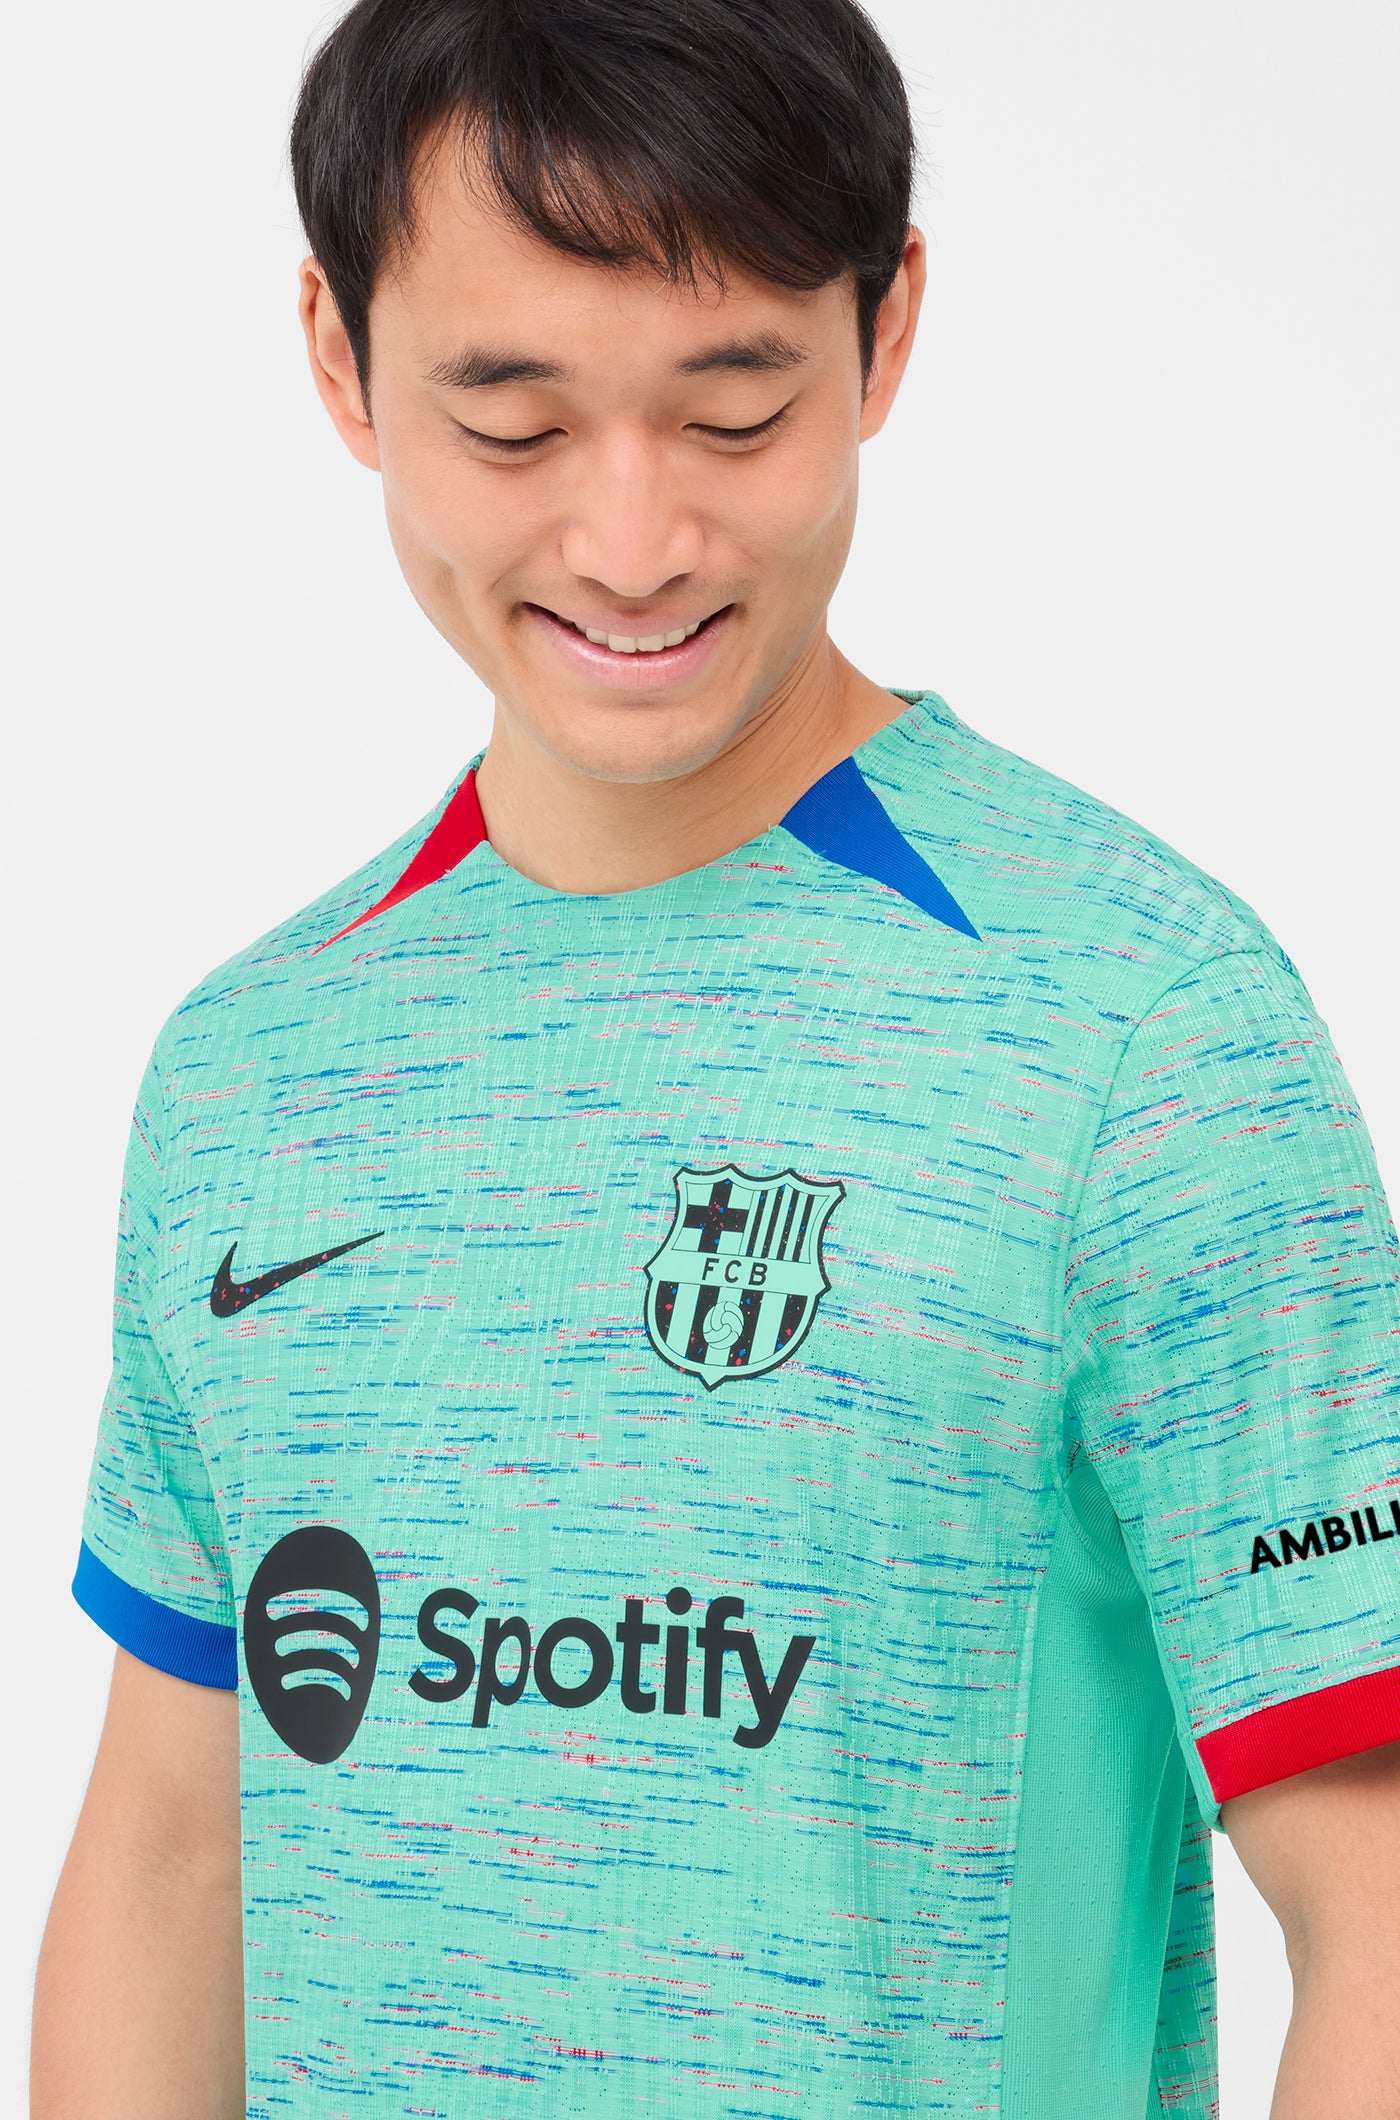 Mallas cortas Barça - Mujer – Barça Official Store Spotify Camp Nou